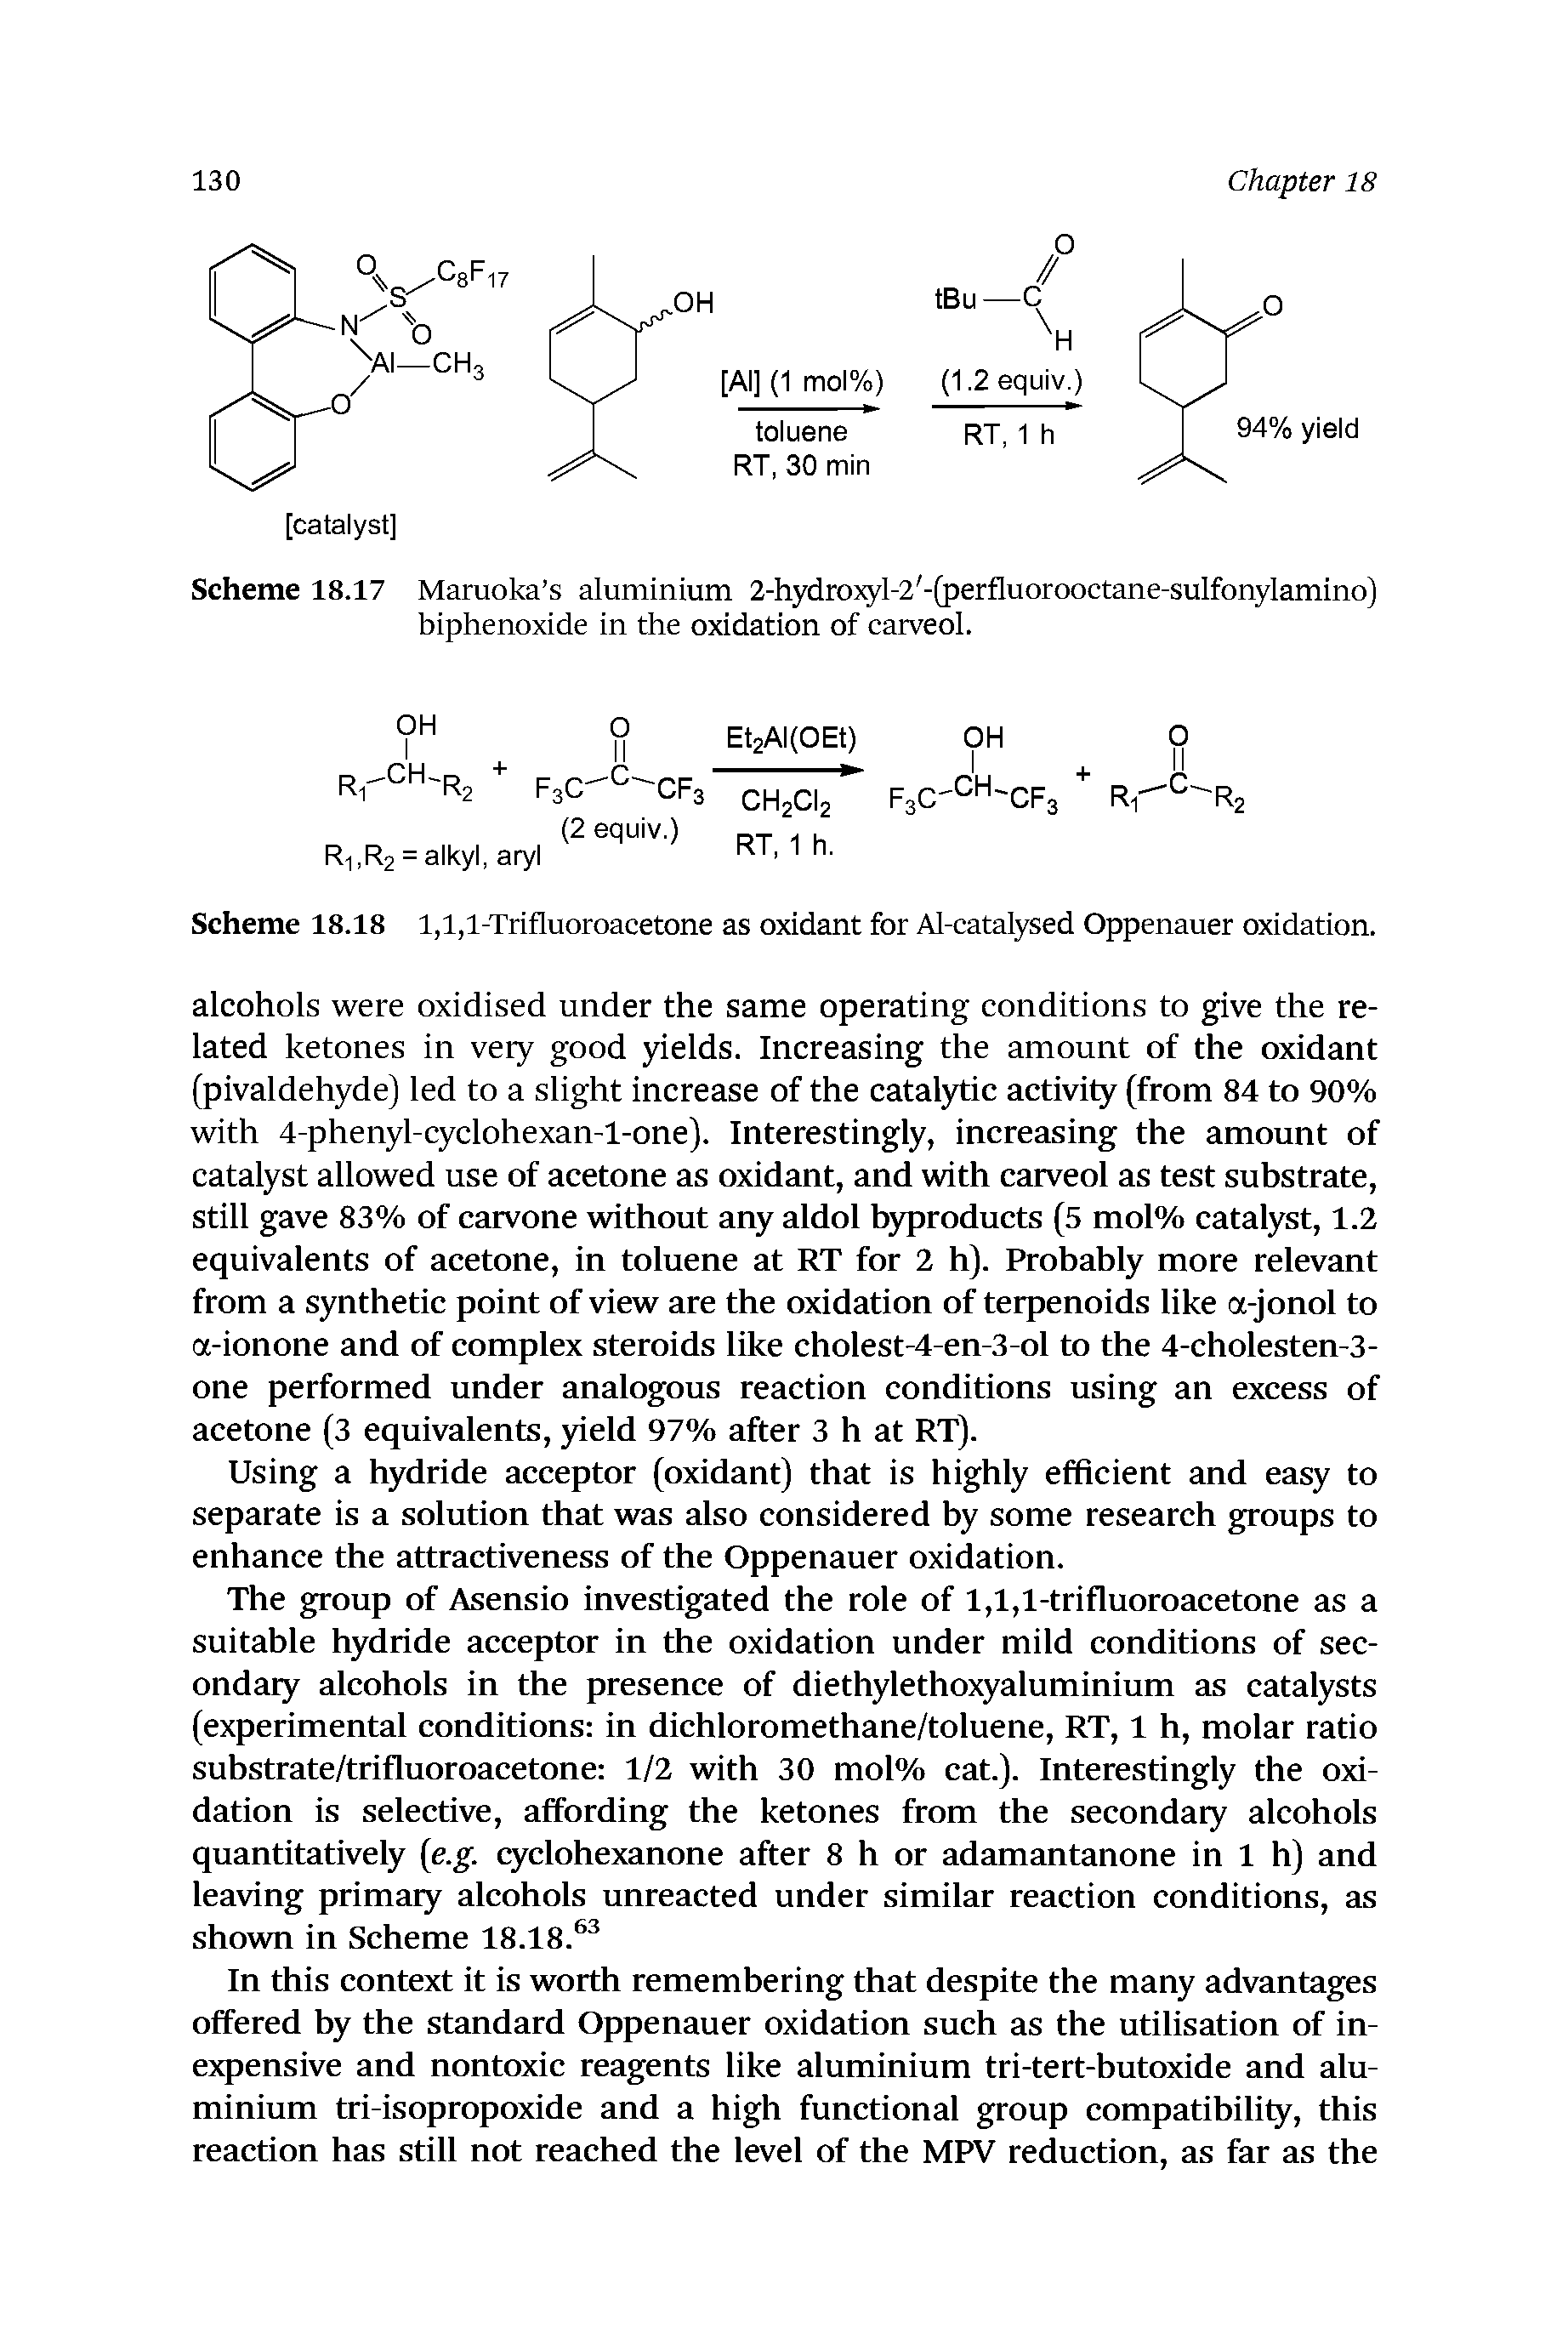 Scheme 18.18 1,1,1-Trifluoroacetone as oxidant for Al-catalysed Oppenauer oxidation.